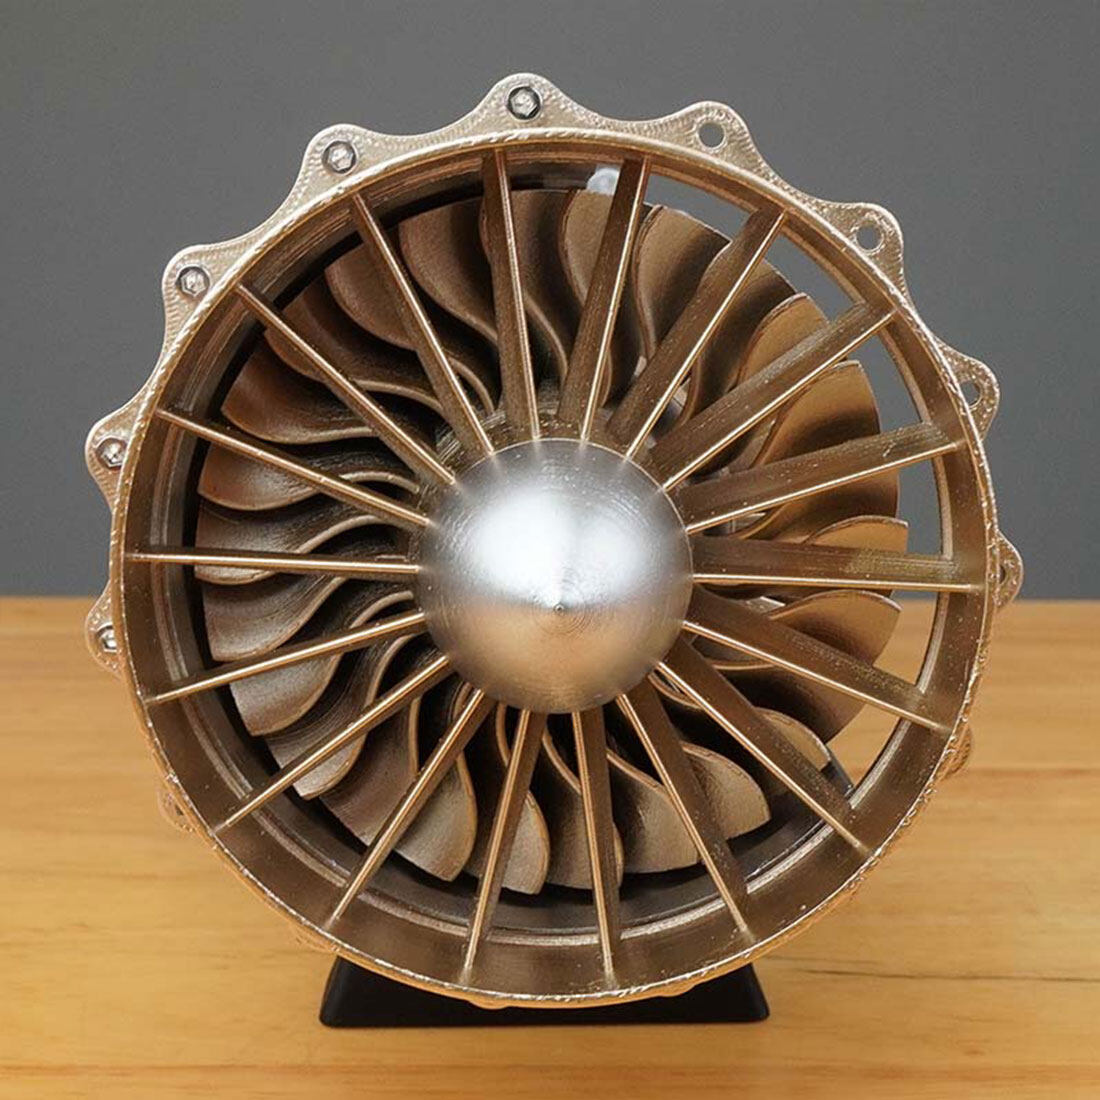 1/20 WS-15 Turbofan Frighter Engine Model DIY Assembly Electric Model (150+ PCS) enginediyshop